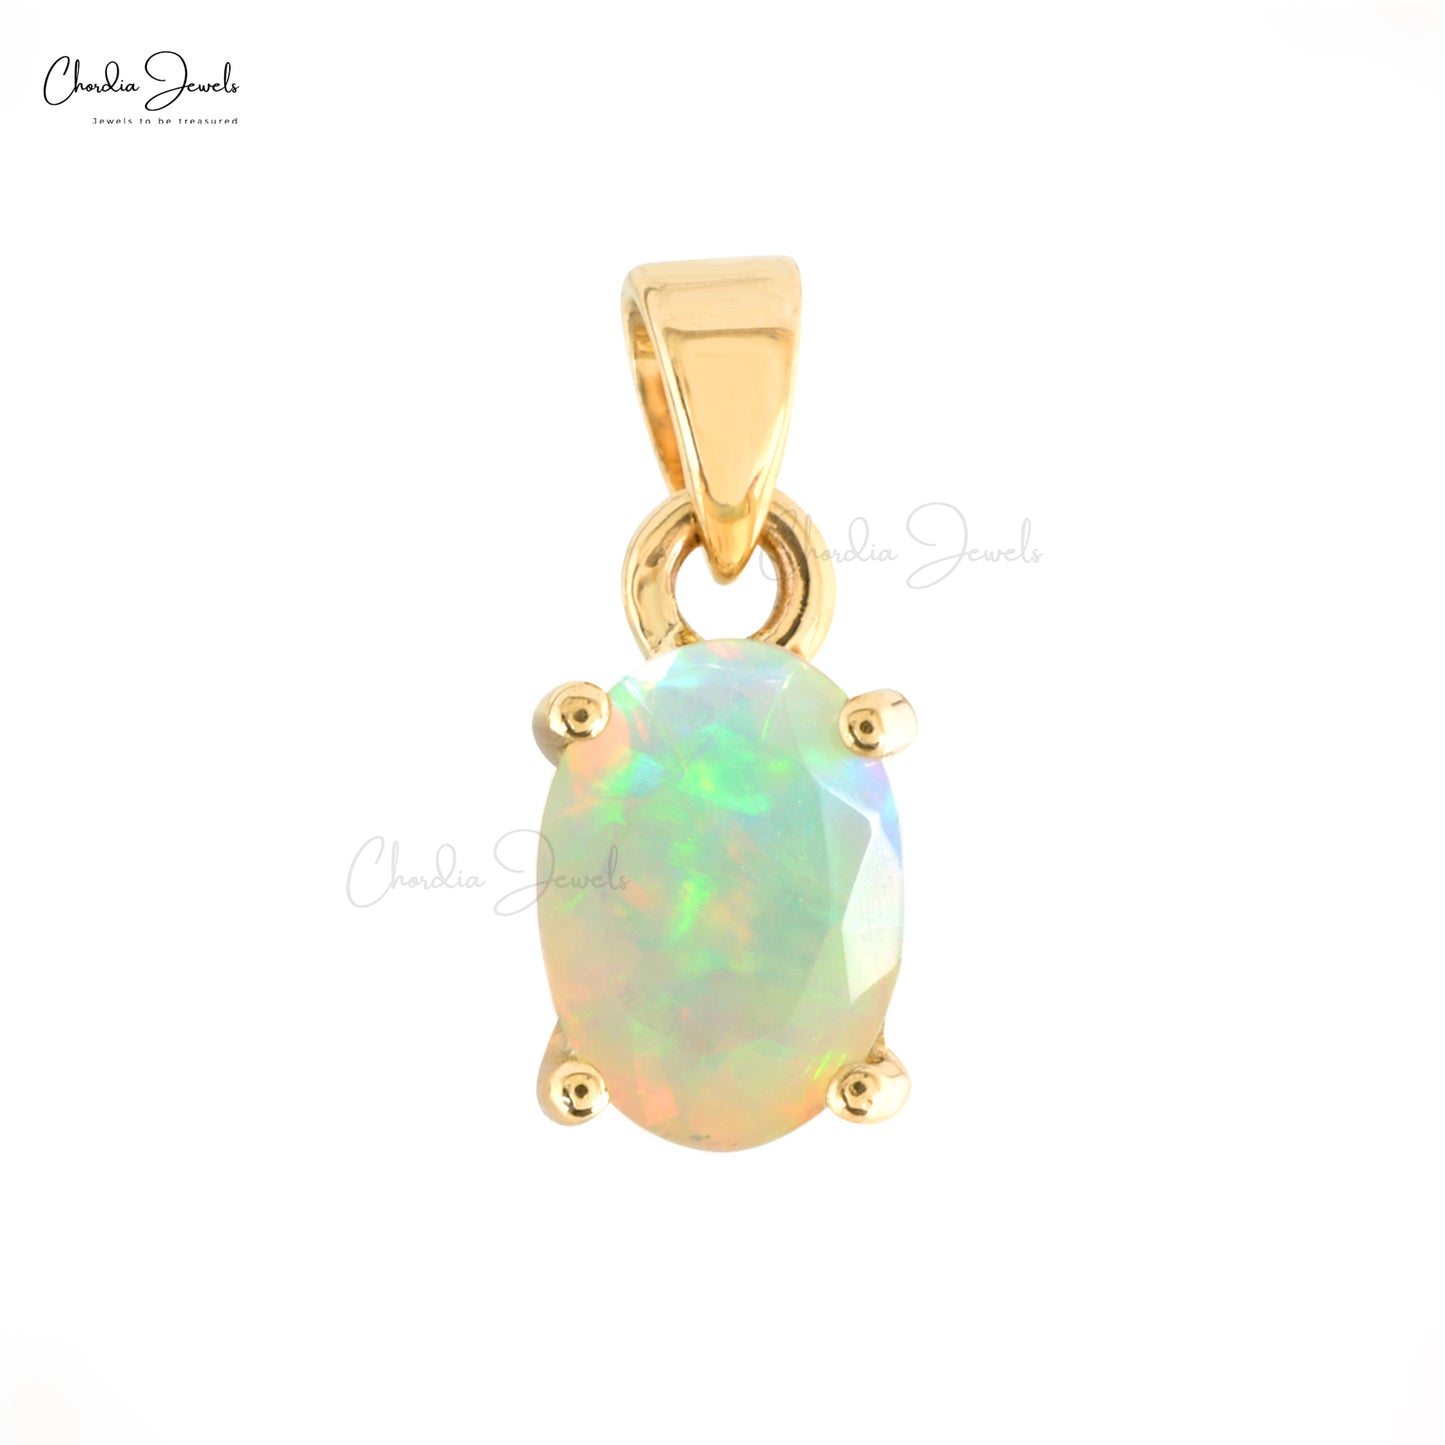 Genuine Opal Gemstone Dainty Pendant 14k Solid Yellow Gold 0.8ct October Birthstone Drop Pendant